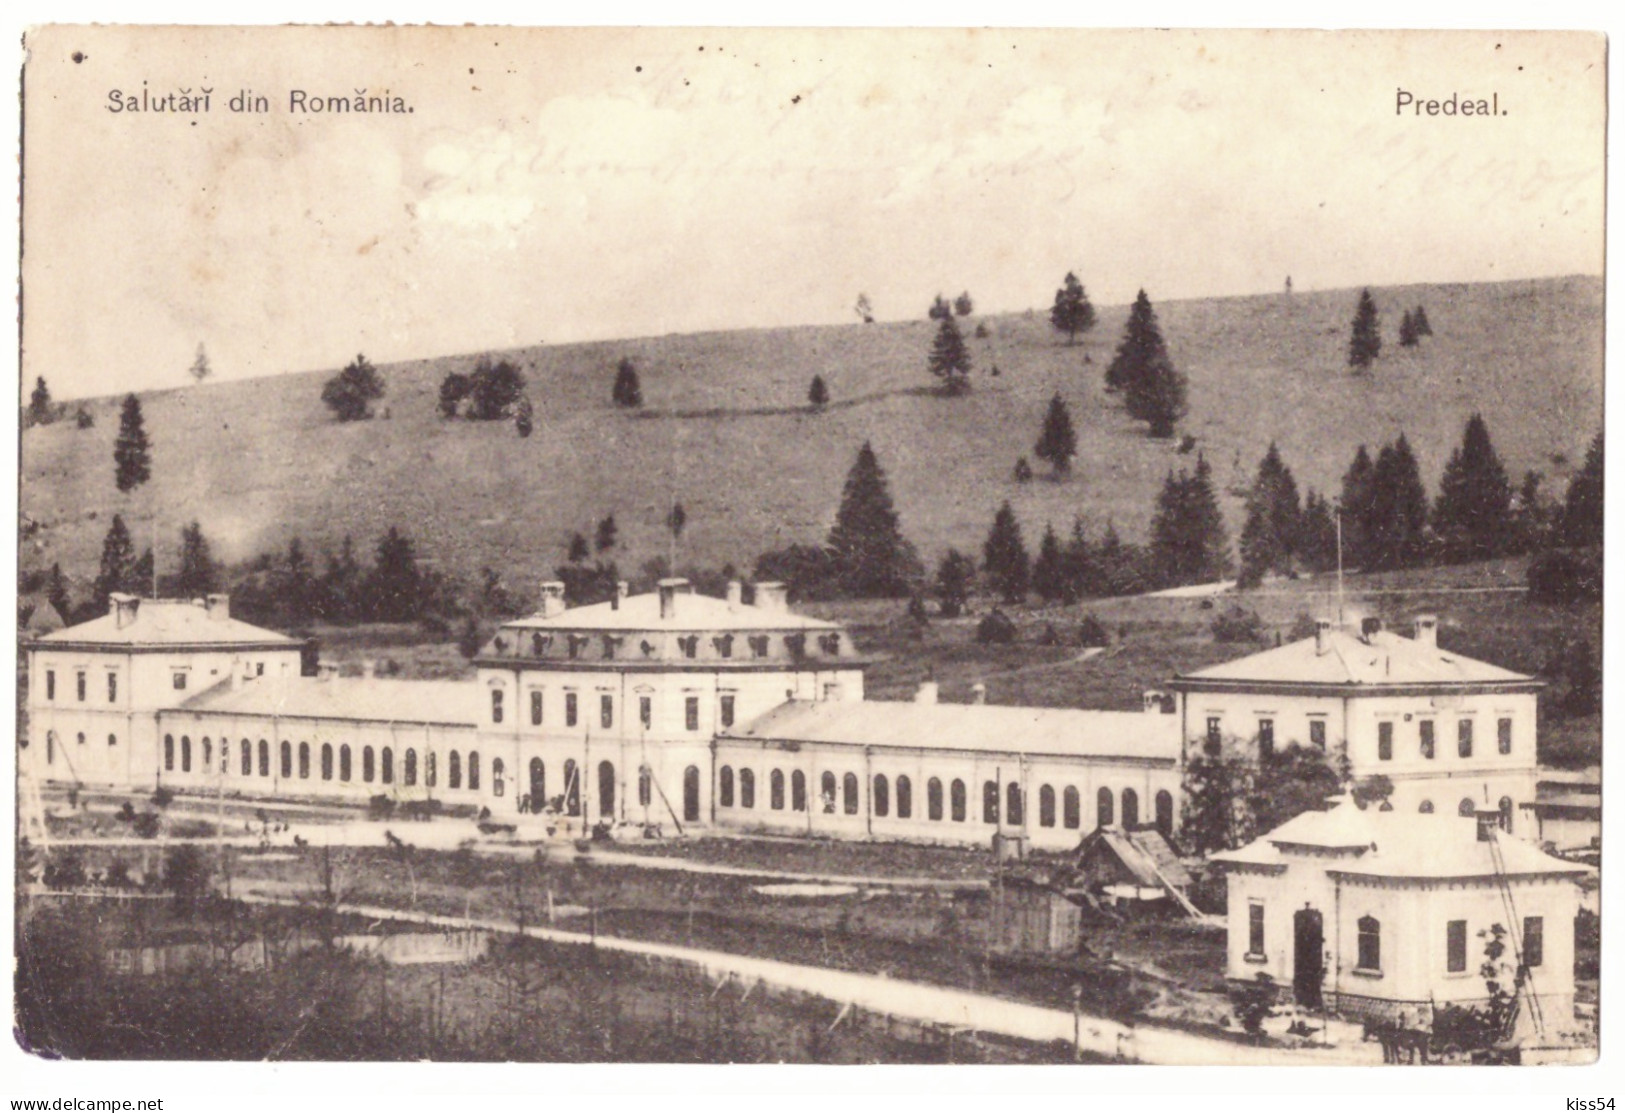 RO 83 - 21110 PREDEAL, Brasov, Romania - Old Postcard - Used - 1906 - Rumänien